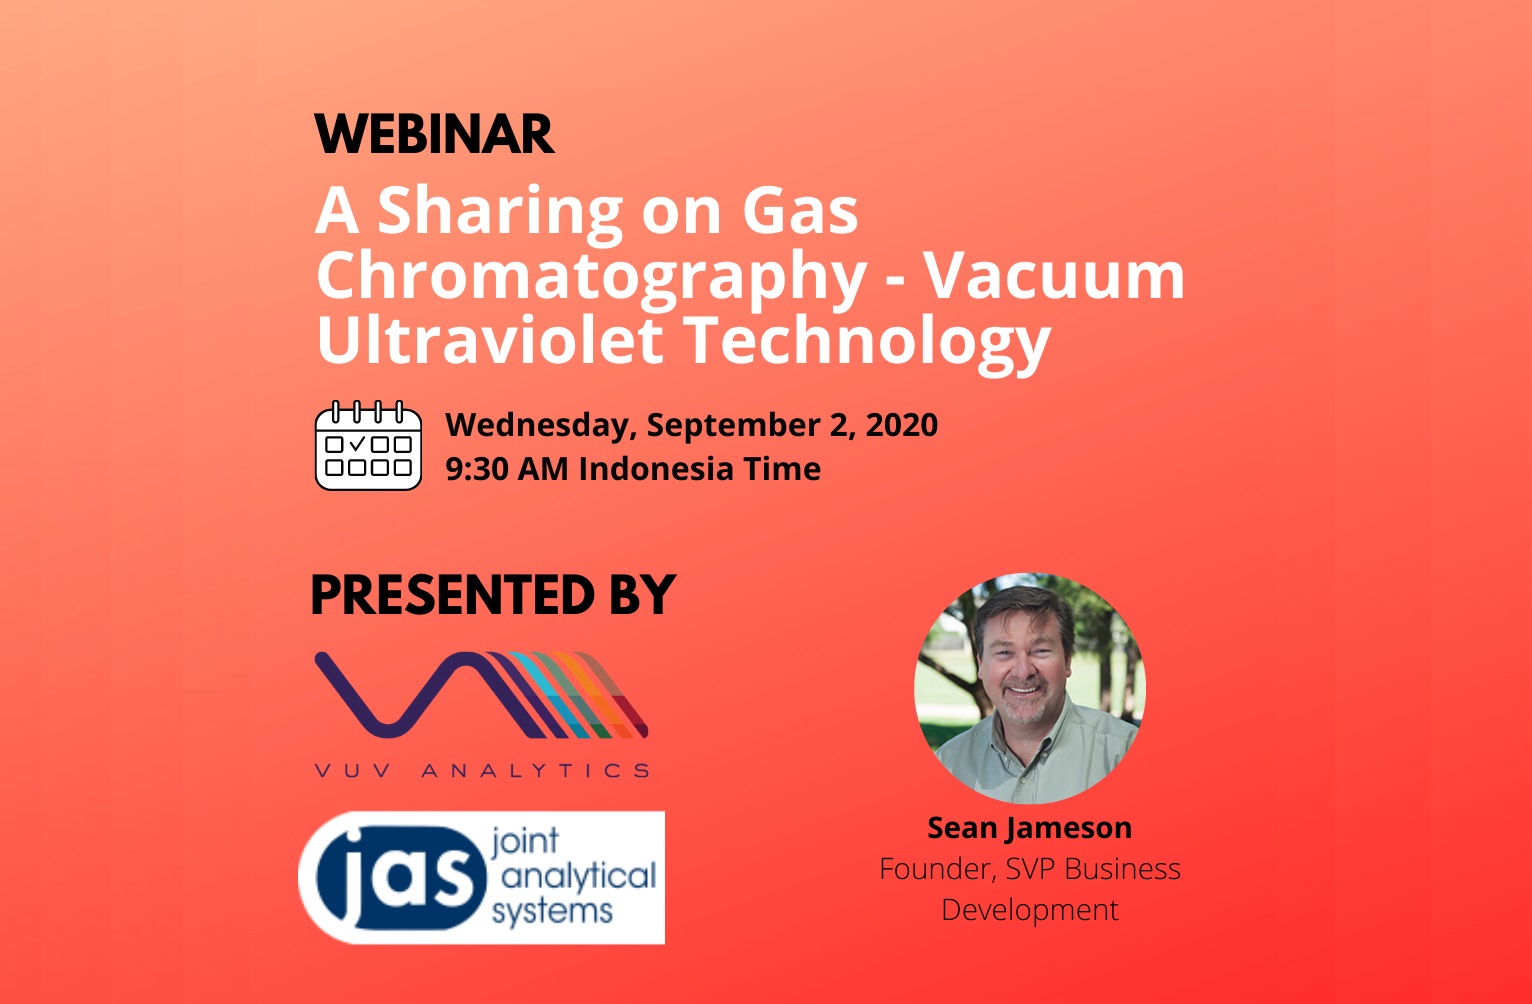 VUV Analytics: A Sharing on Gas Chromatography - Vacuum Ultraviolet Technology